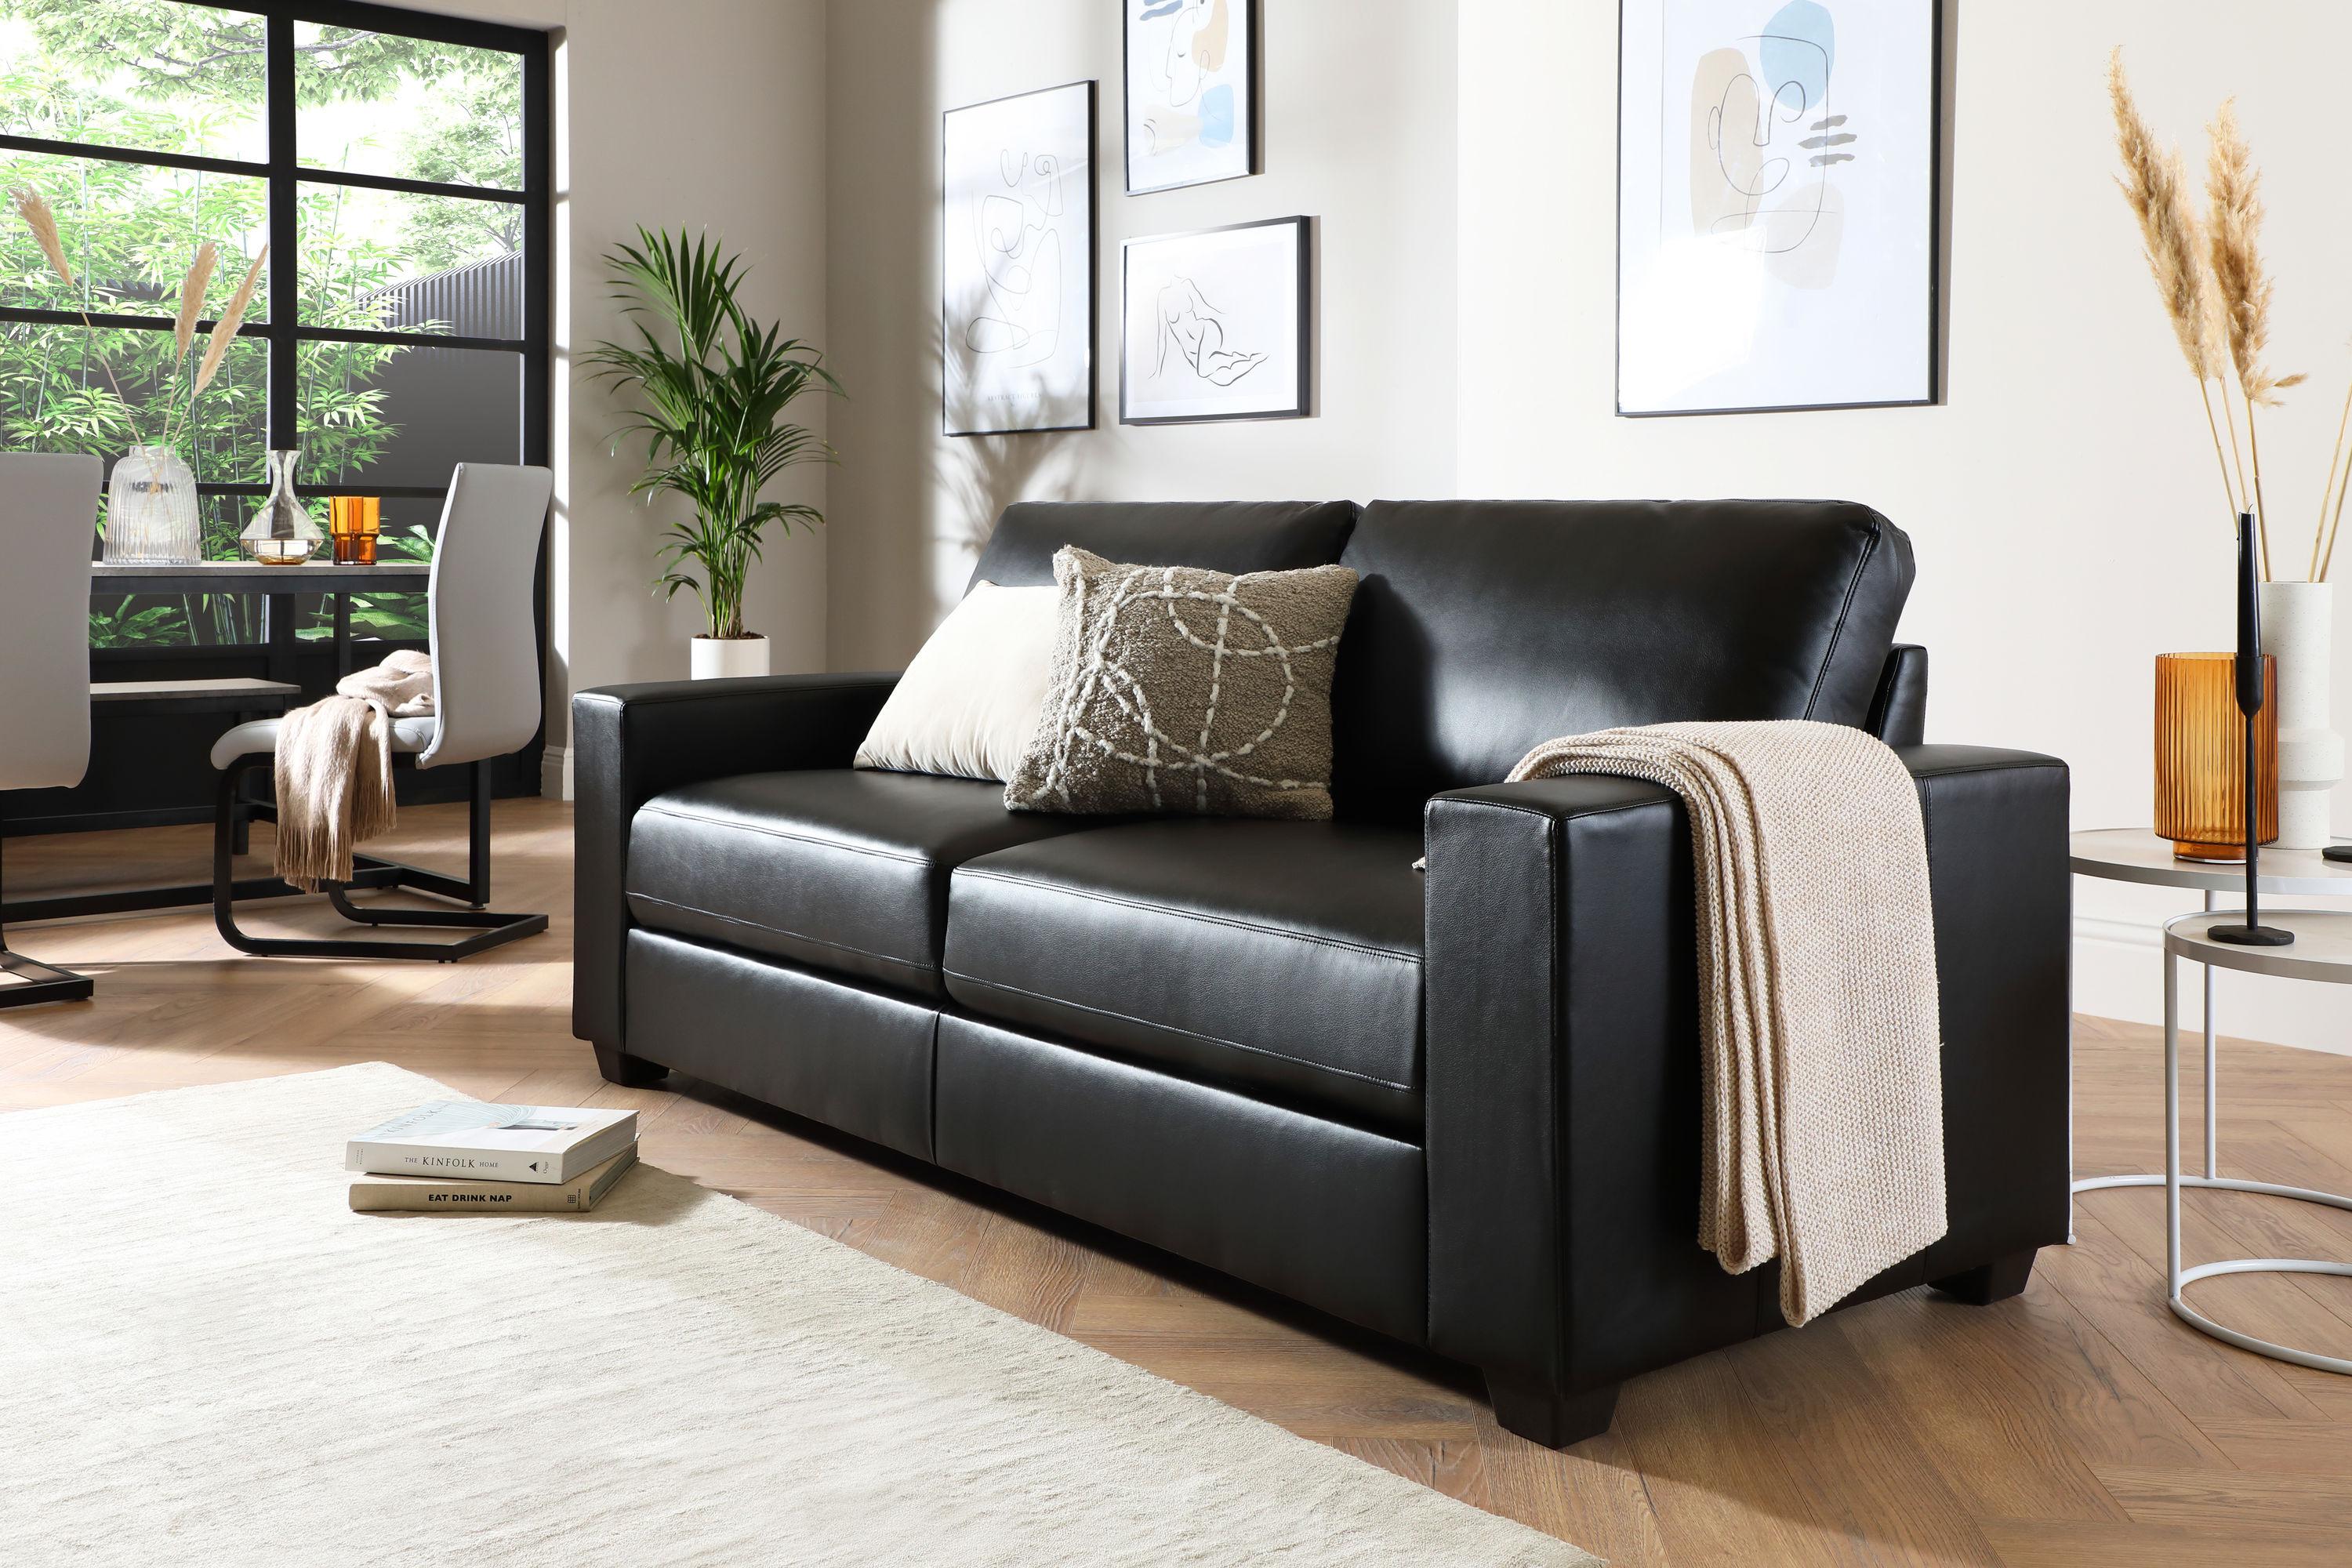 minimalistic living room with black leather sofa